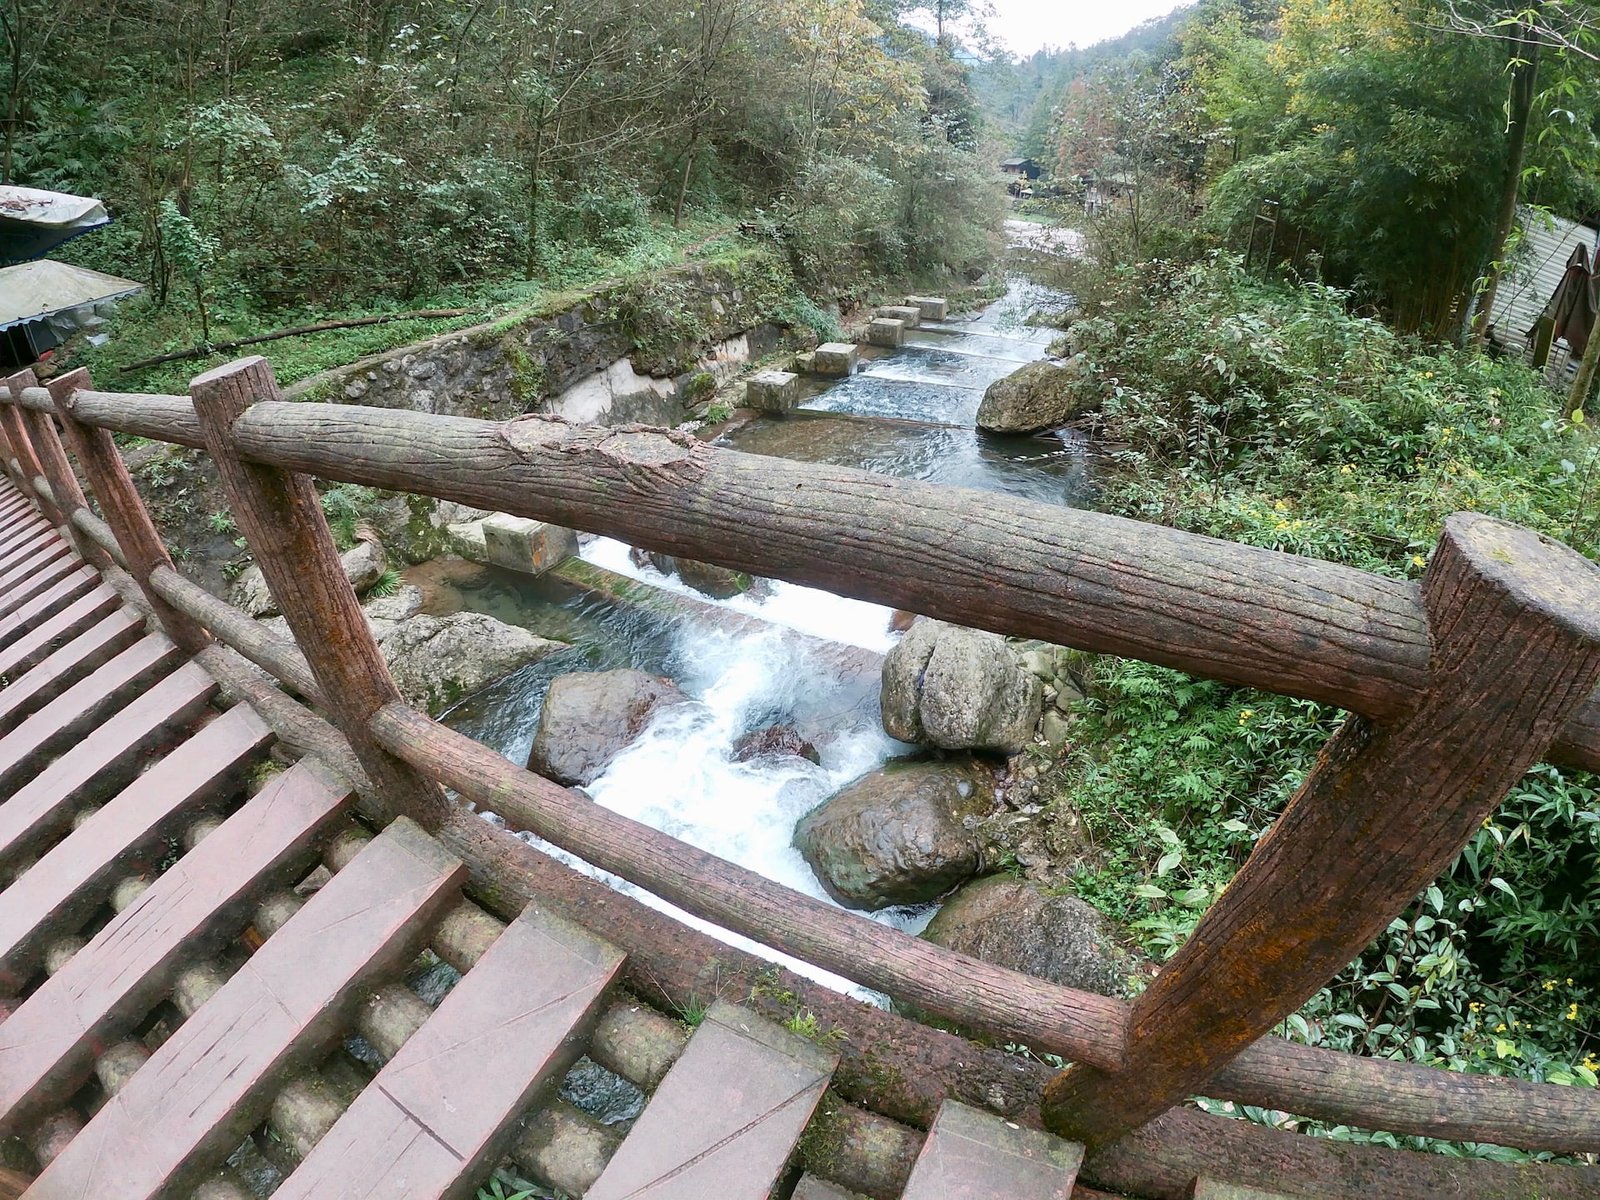 Hiking Qingcheng Back Mountain: beautiful scenery and log bridges across running water: the perfect day trip from Chengdu. 